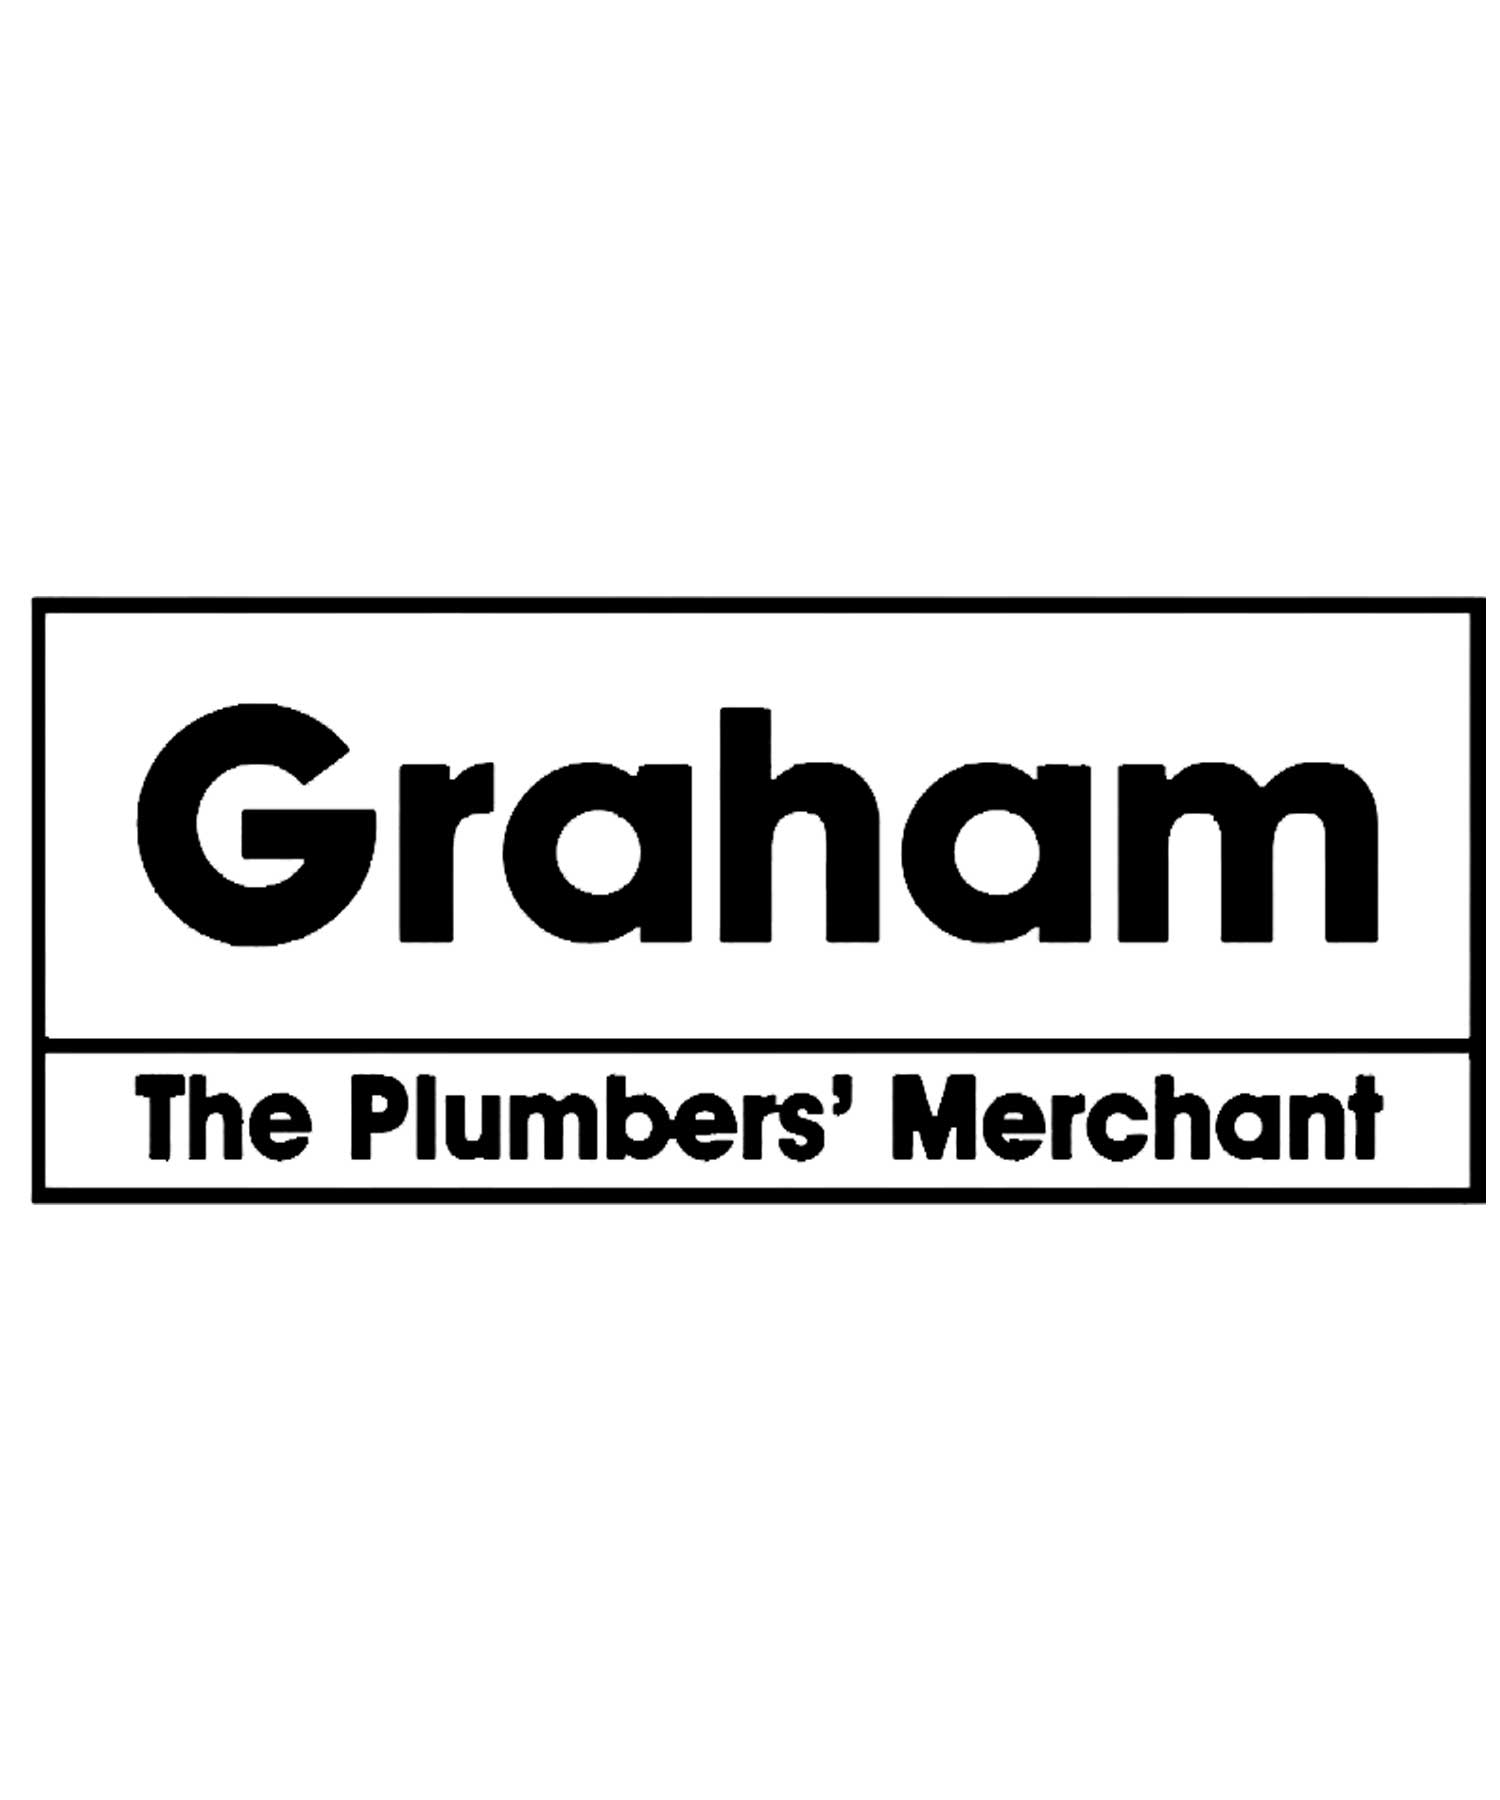 Graham Plumbers Merchant